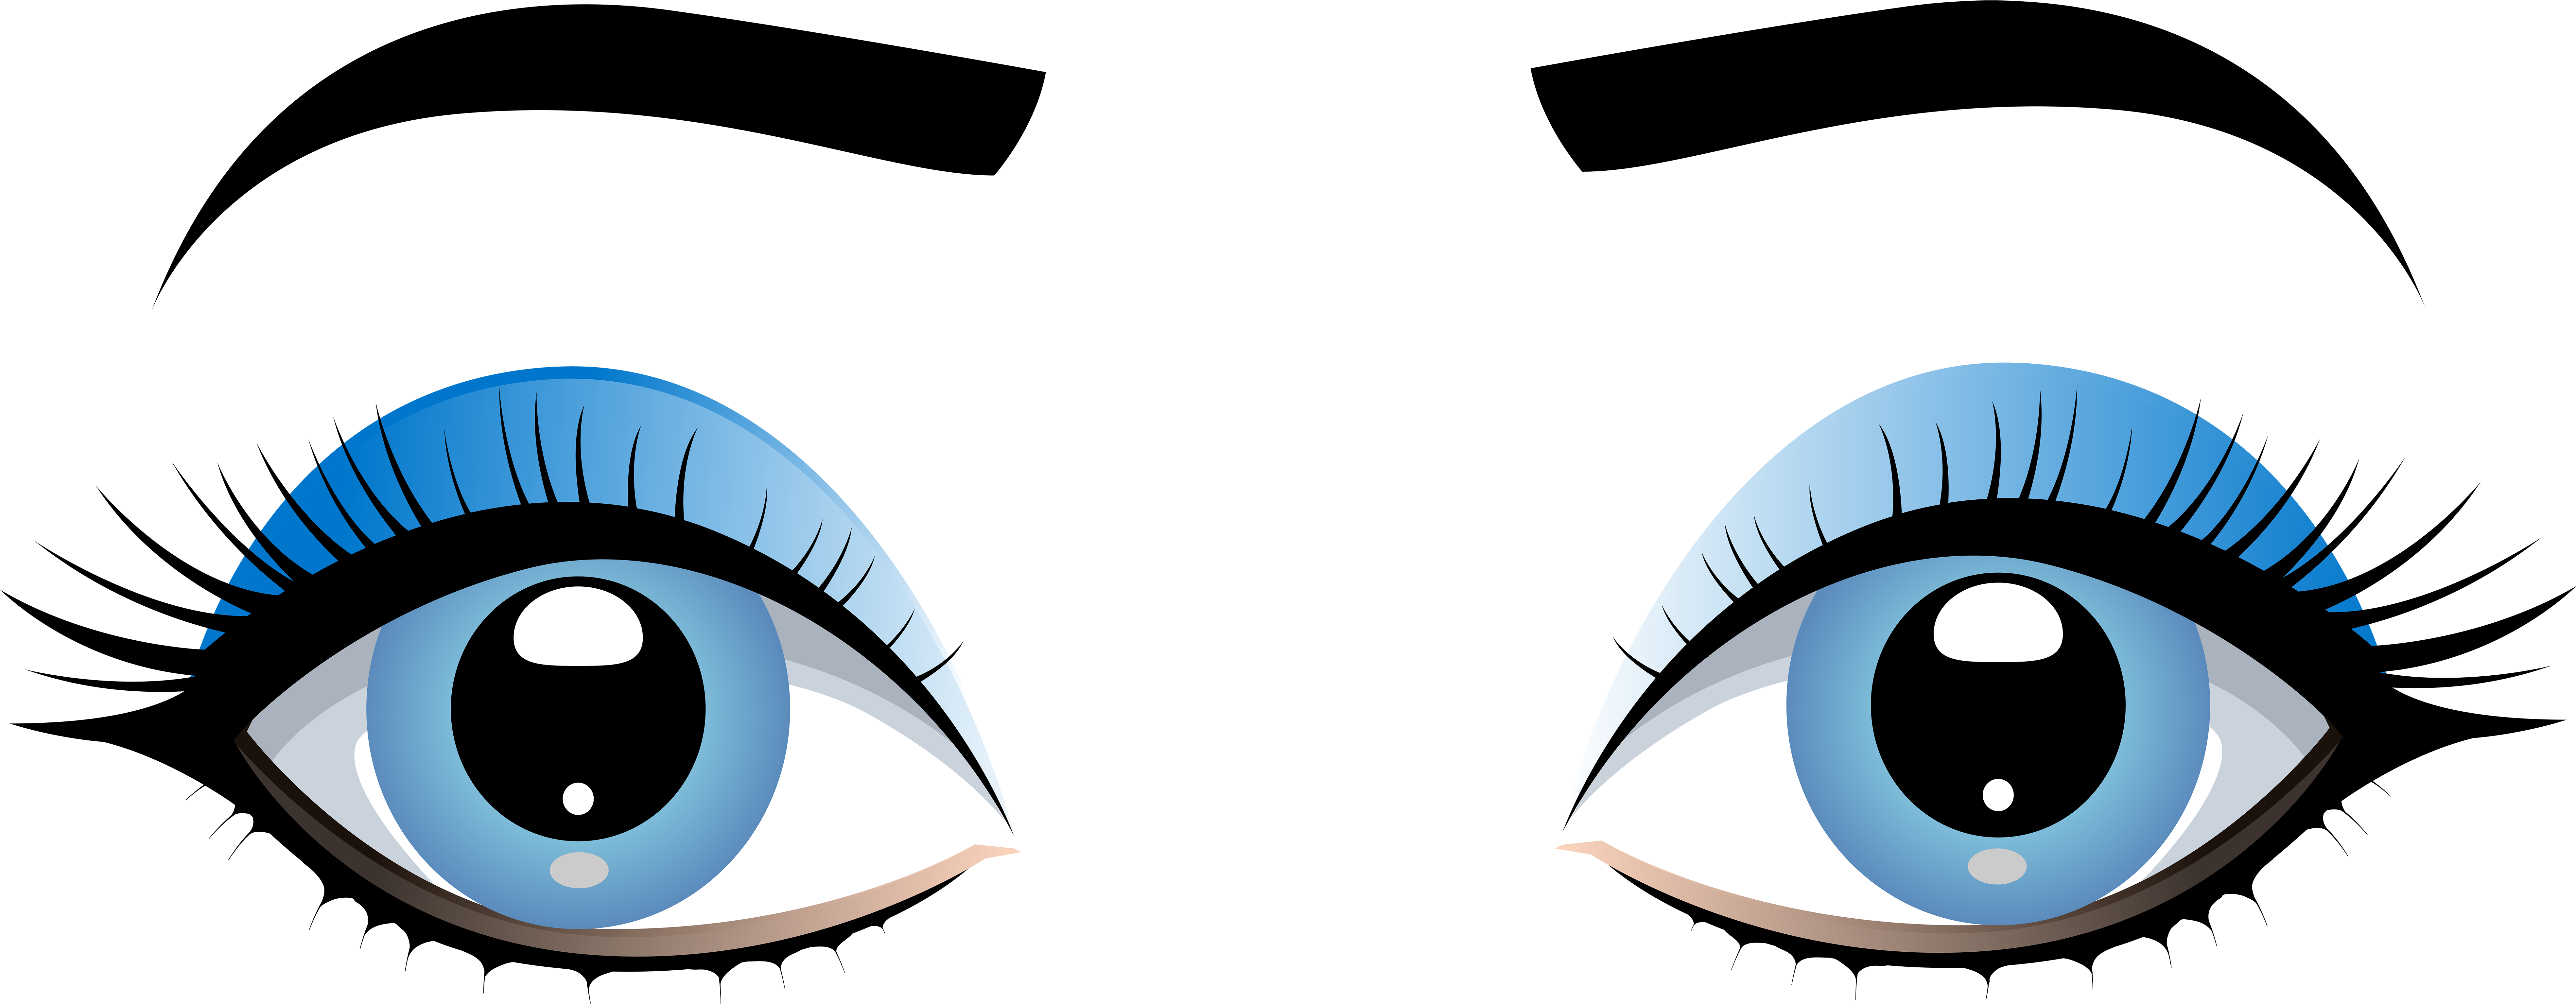 Blue Eyes PNG HD Quality